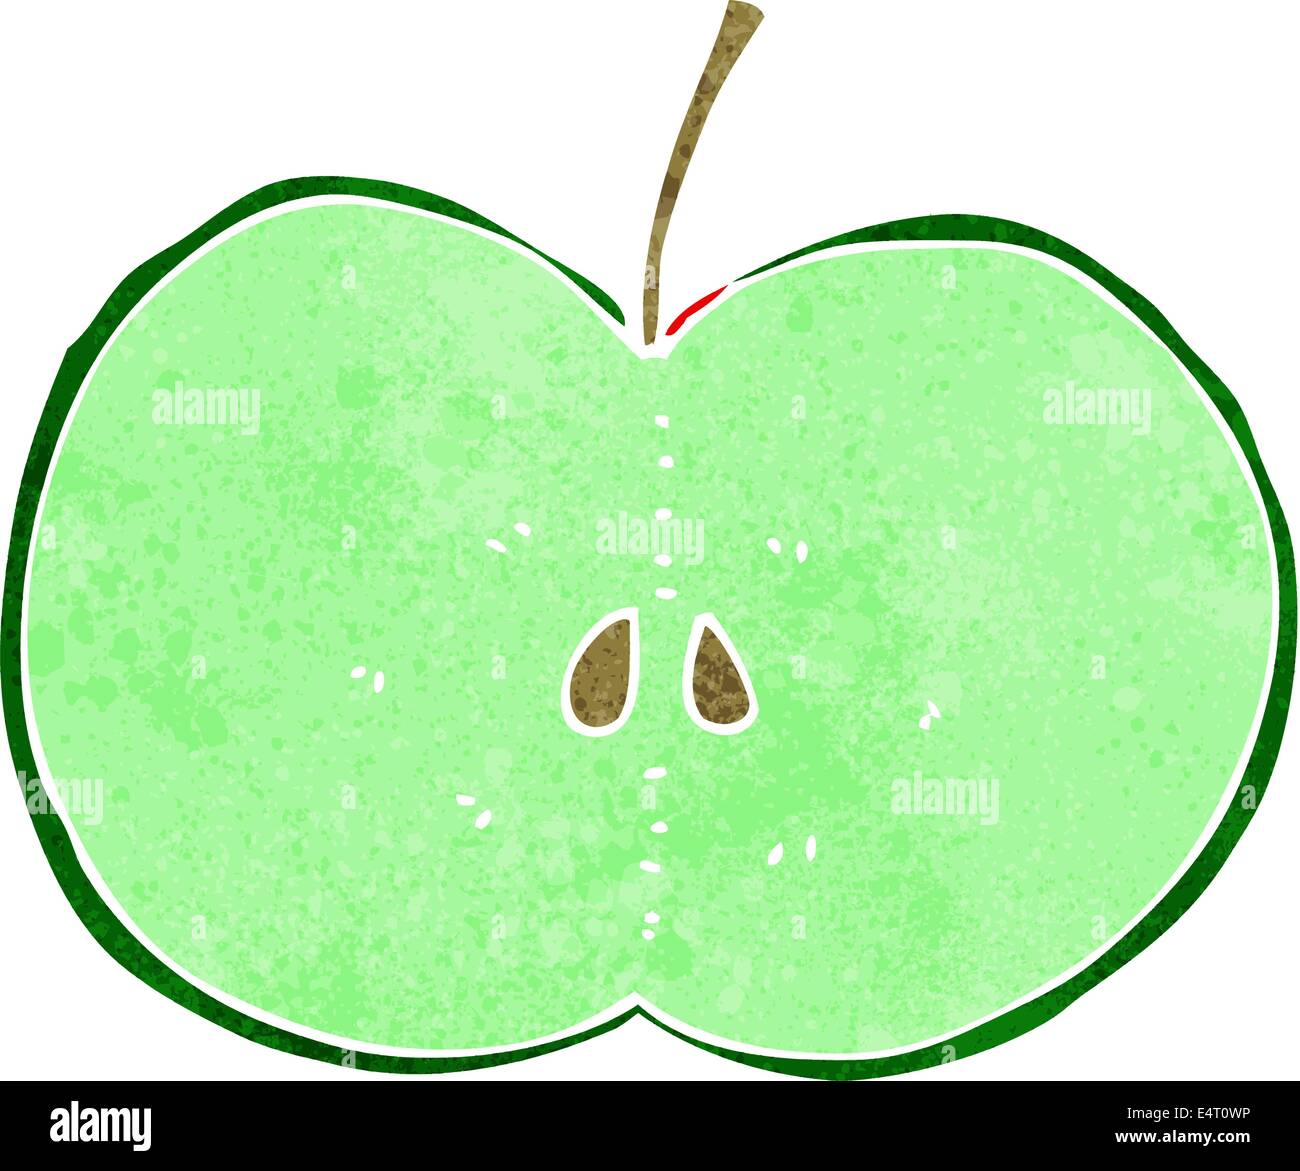 cartoon sliced apple Stock Vector